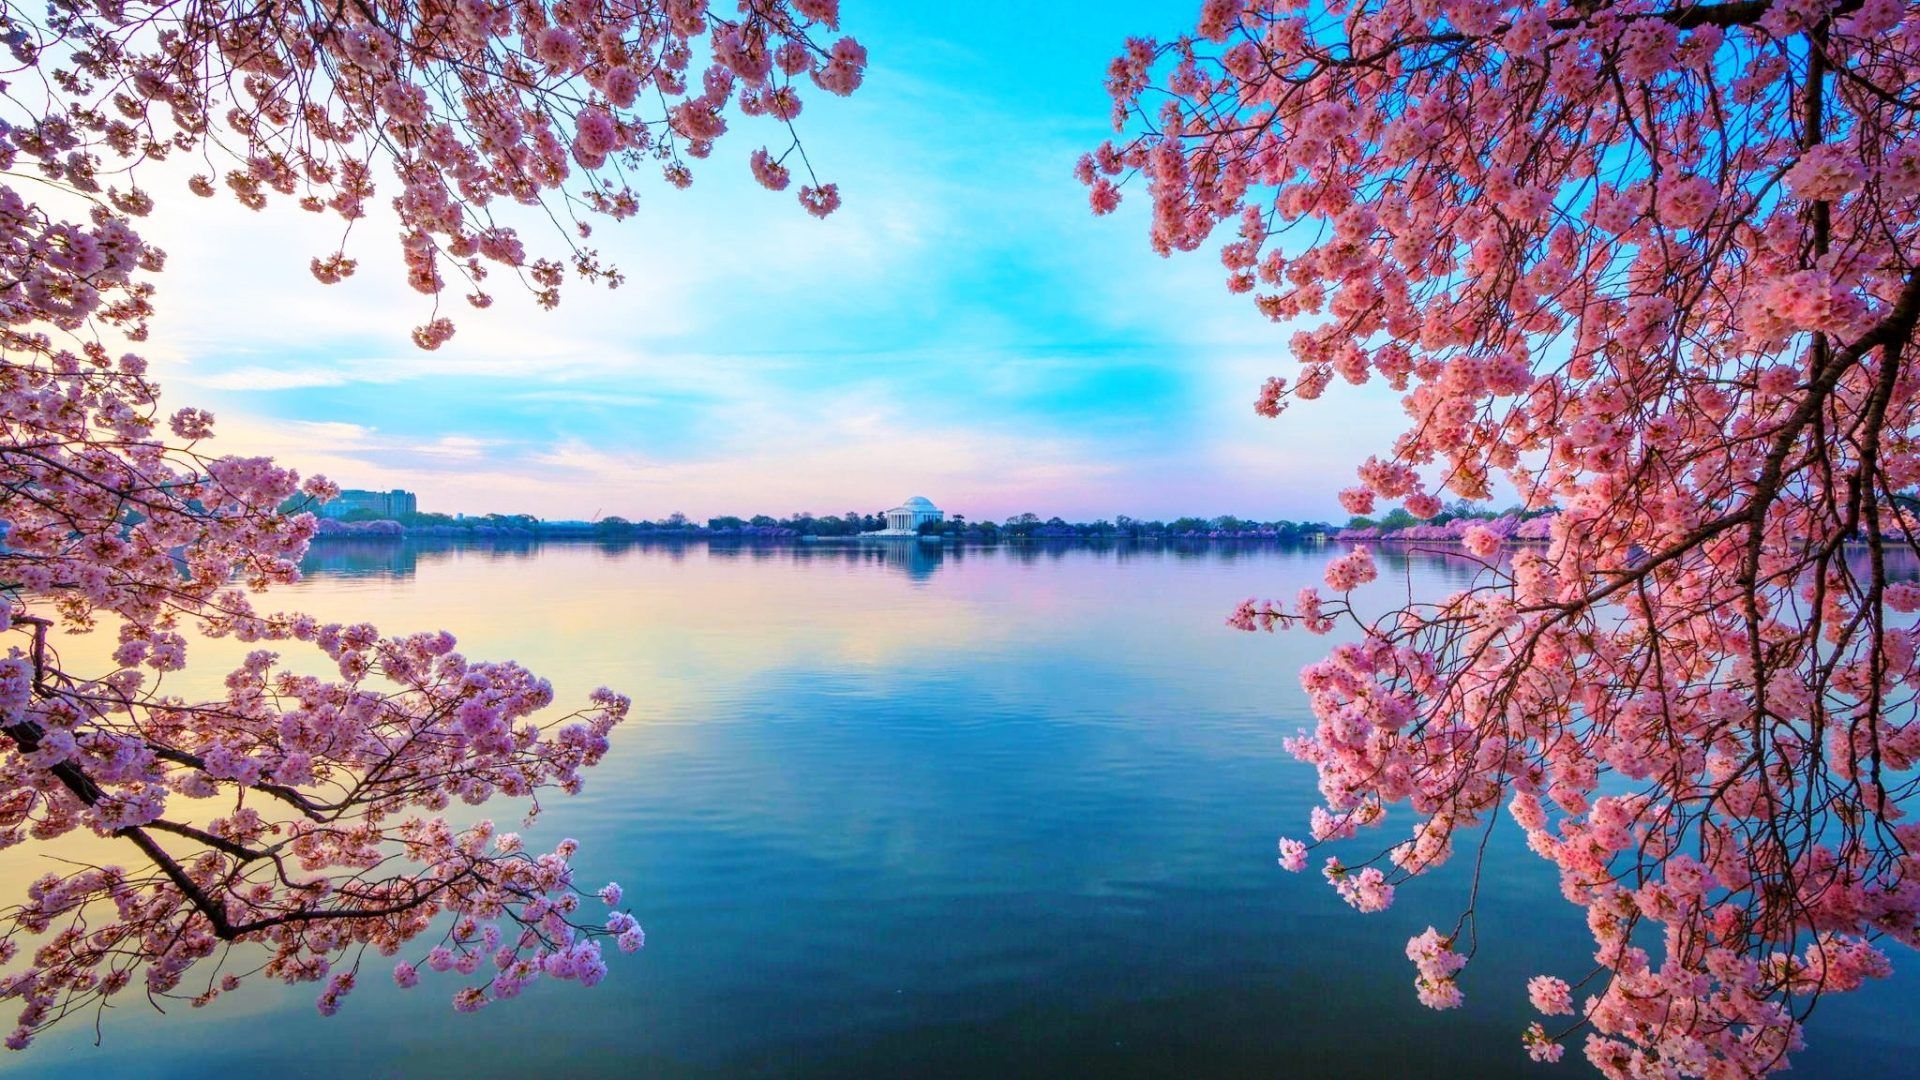 WpNature.com Lake Flowers Blue Cherry Blossom Water